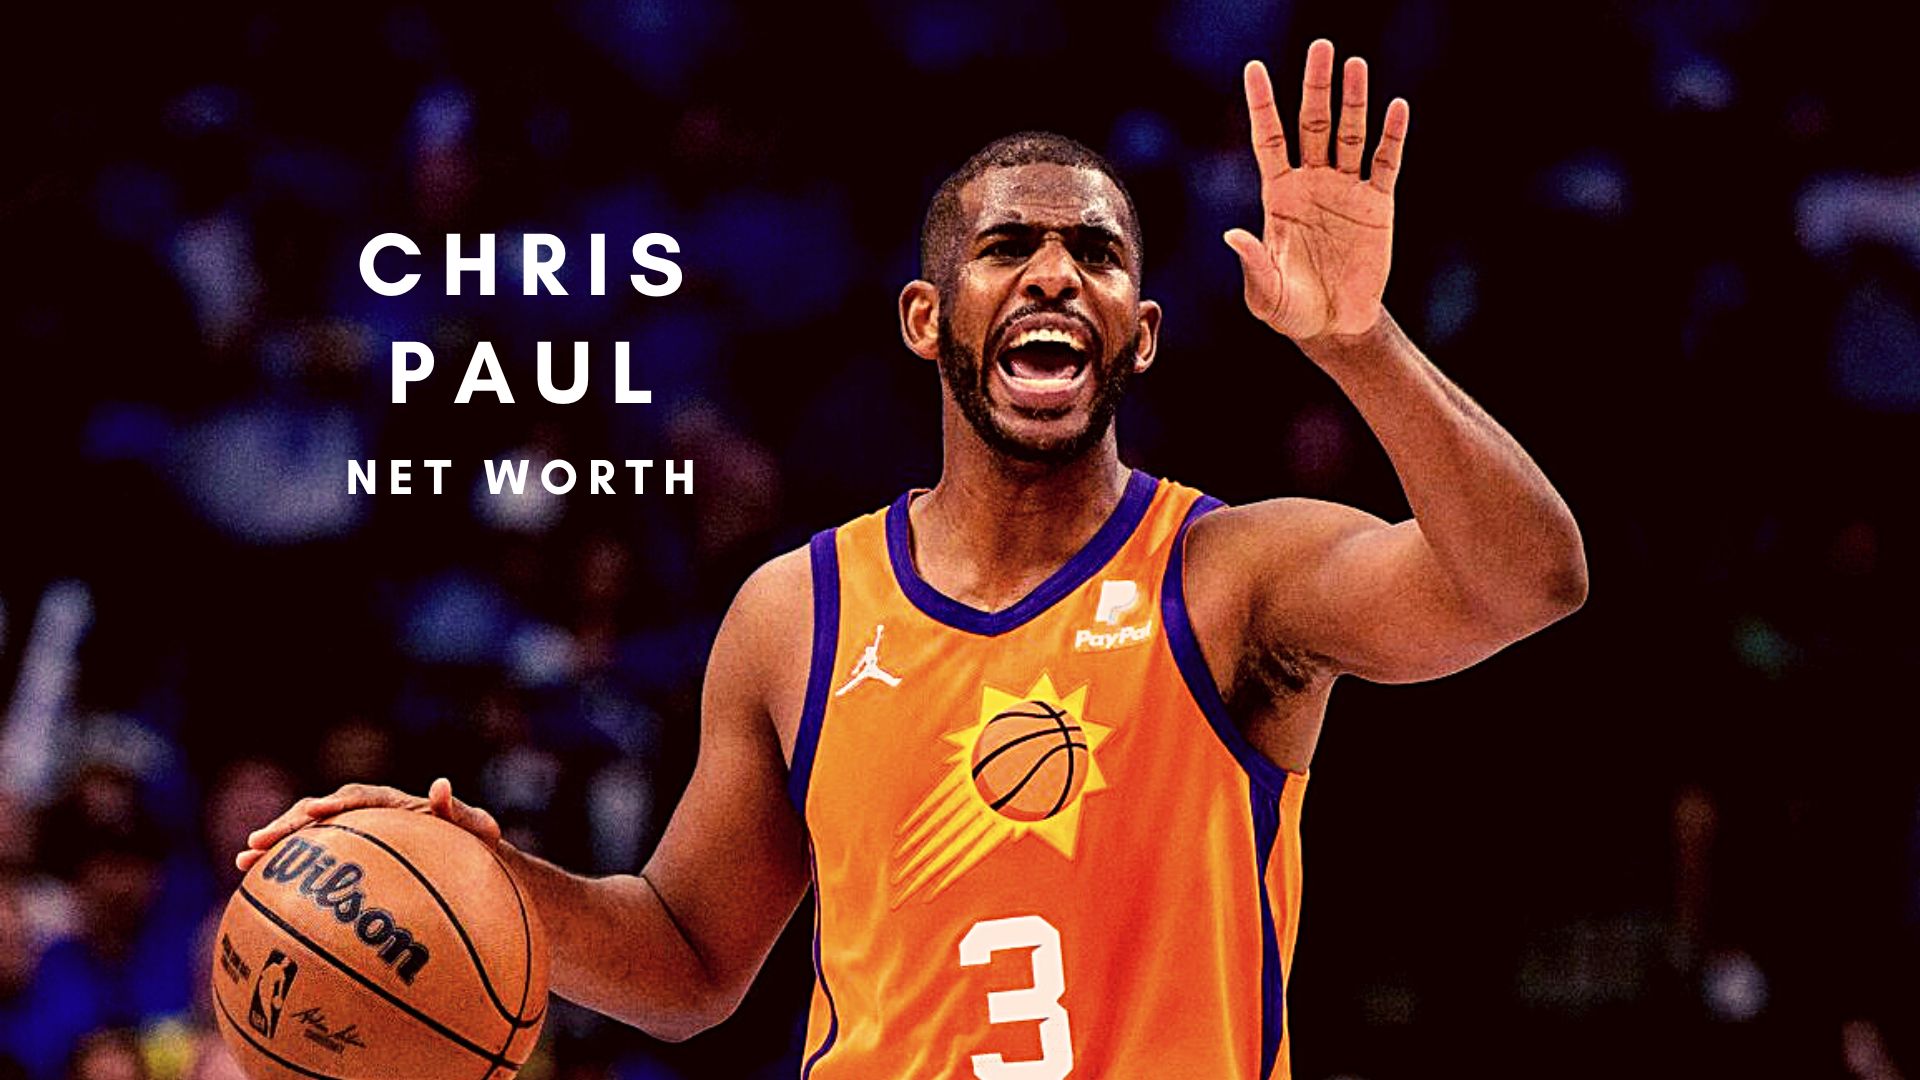 Chris Paul net worth